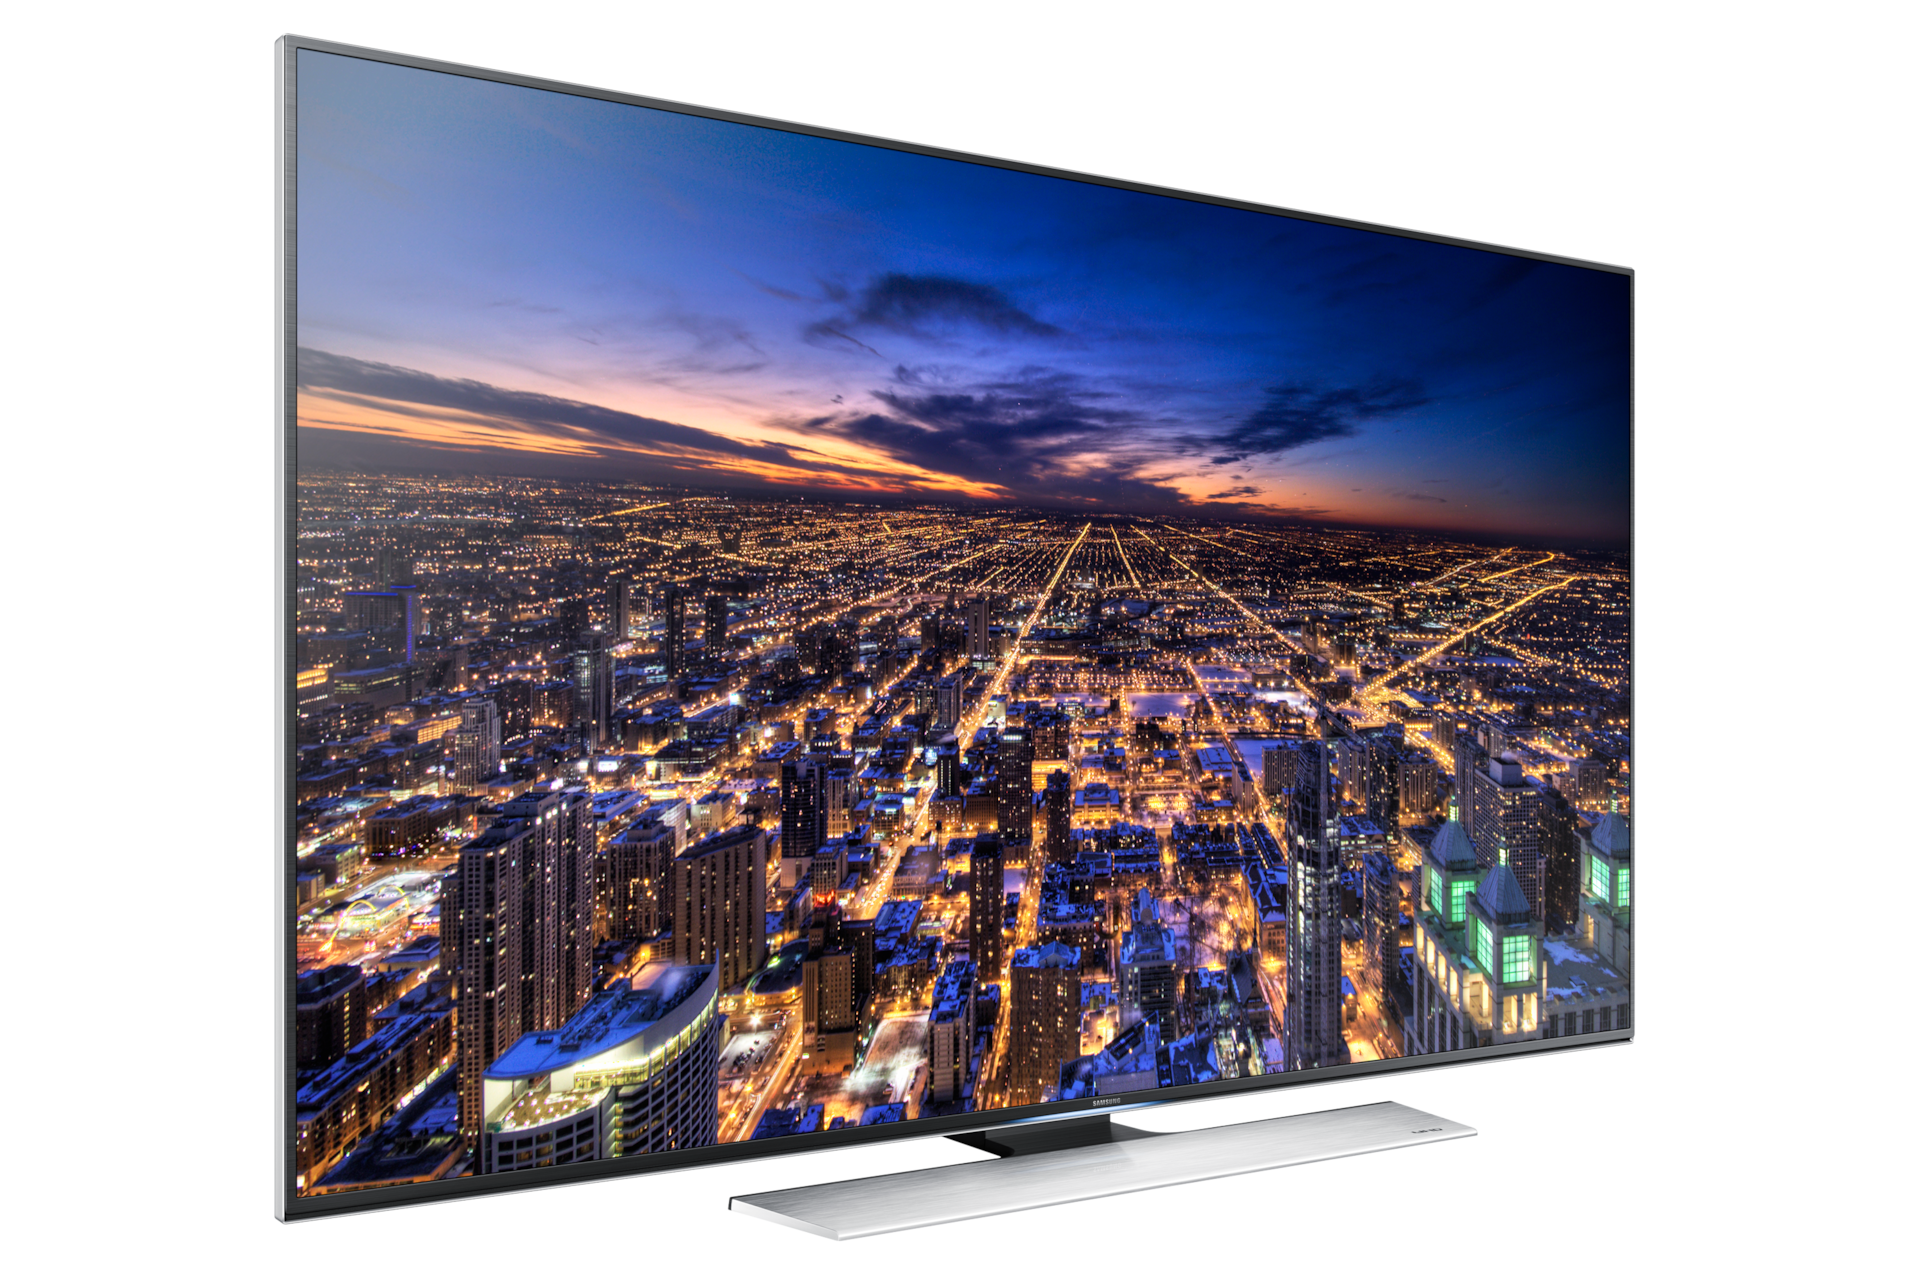 Samsung UHD TV, 4K TV, 85 Inch UHD Full HD TV Price, Features, Specs